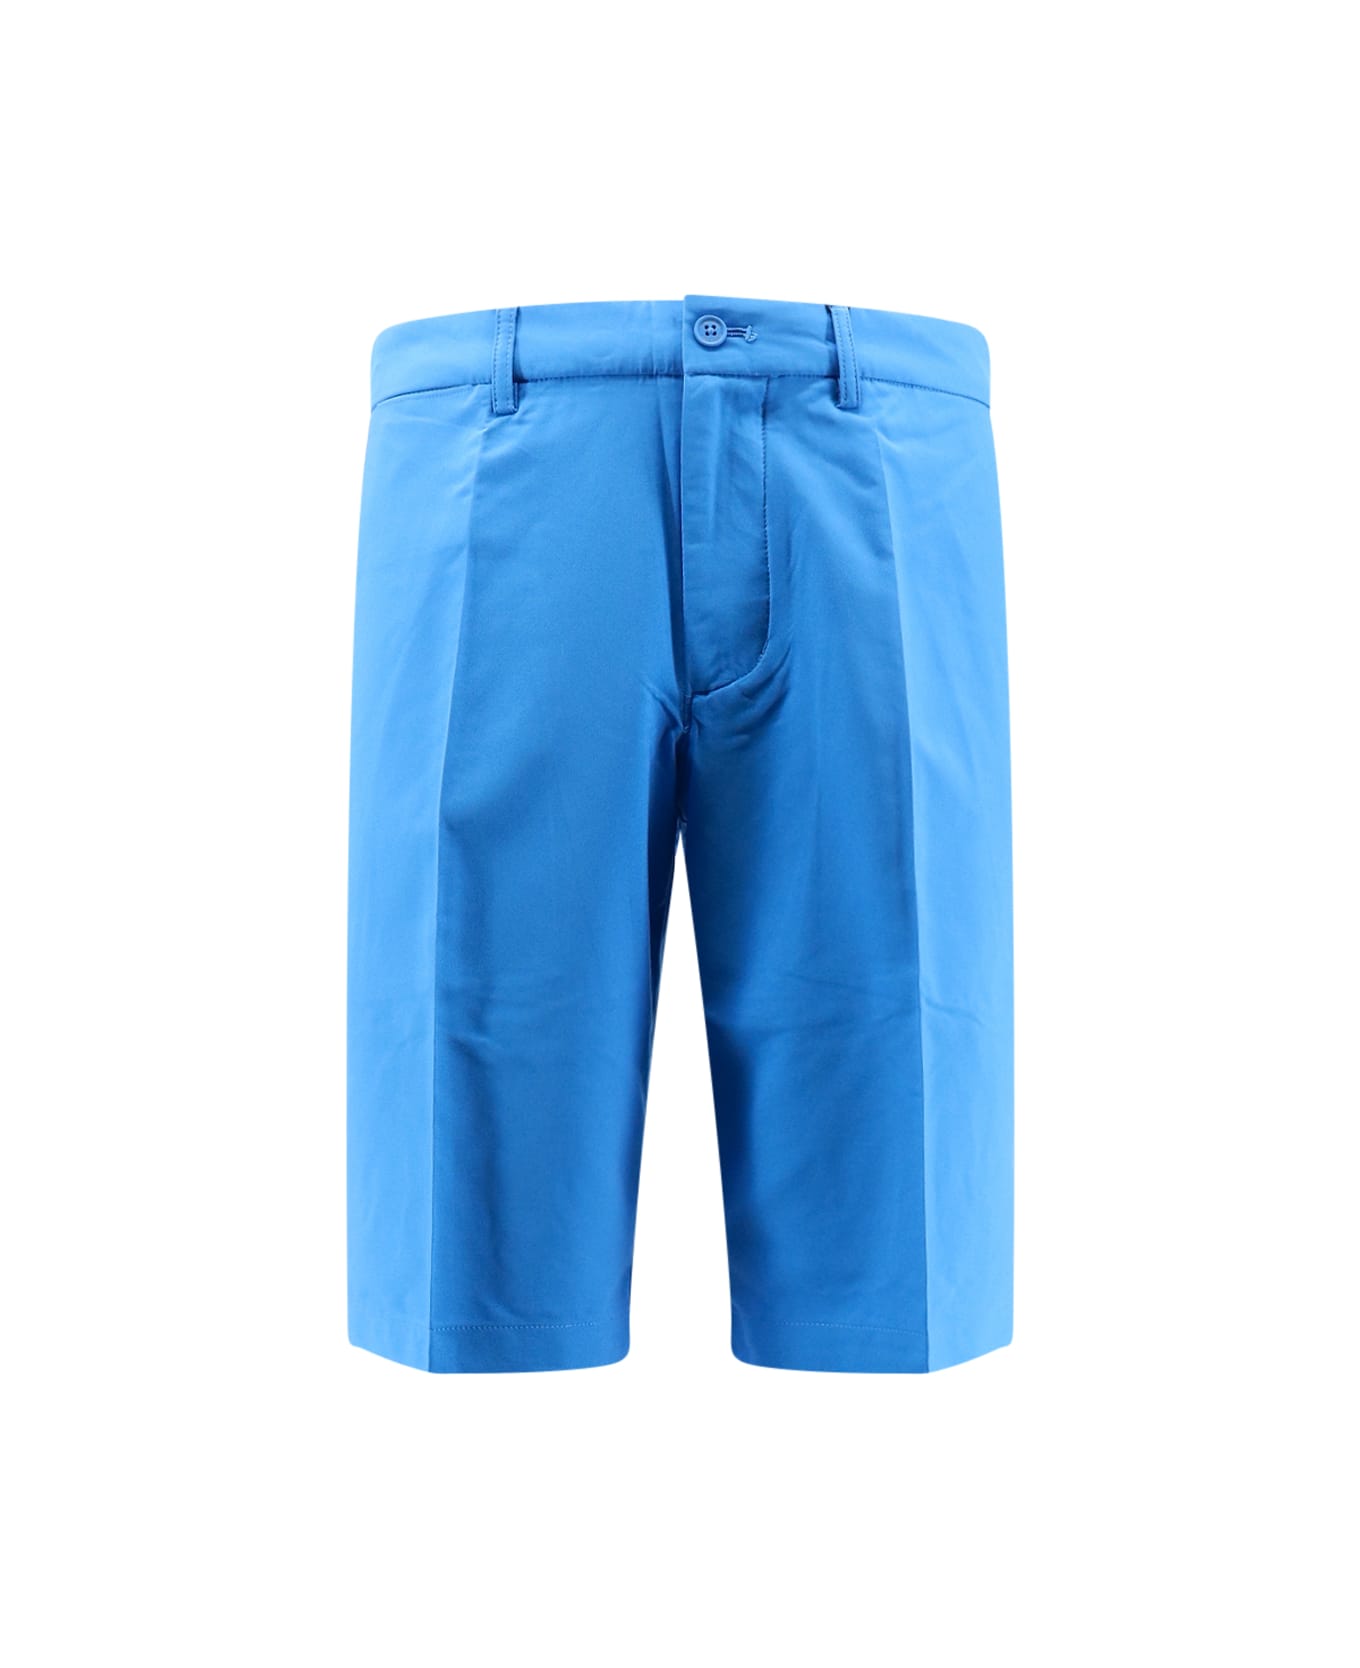 J.Lindeberg Bermuda Shorts - Blue ショートパンツ